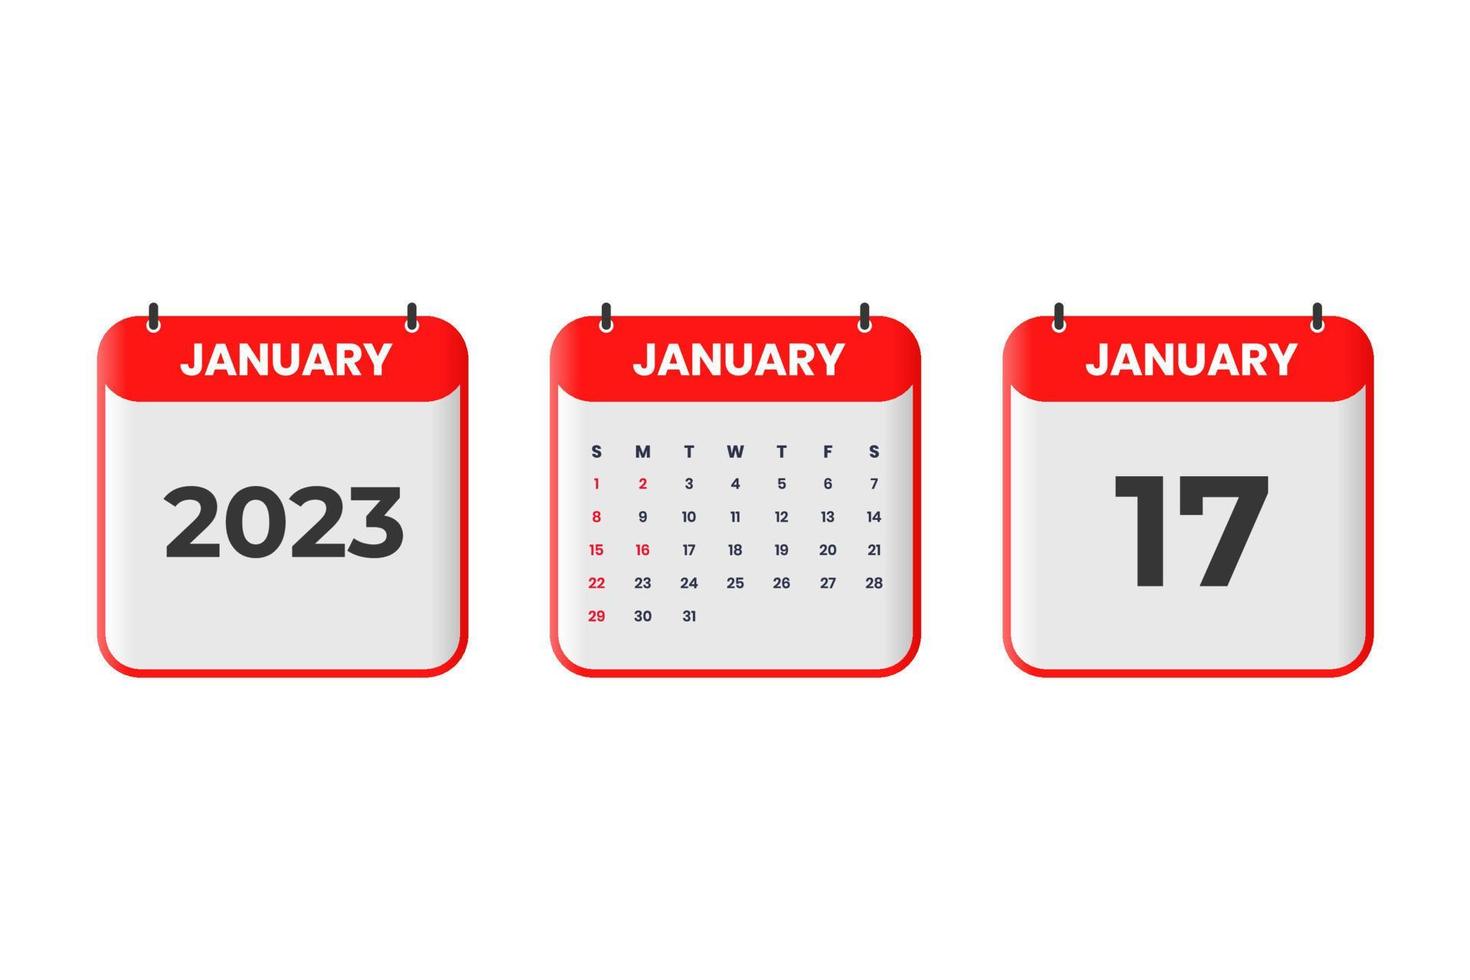 Januar 2023 Kalenderdesign. 17. Januar 2023 Kalendersymbol für Zeitplan, Termin, wichtiges Datumskonzept vektor